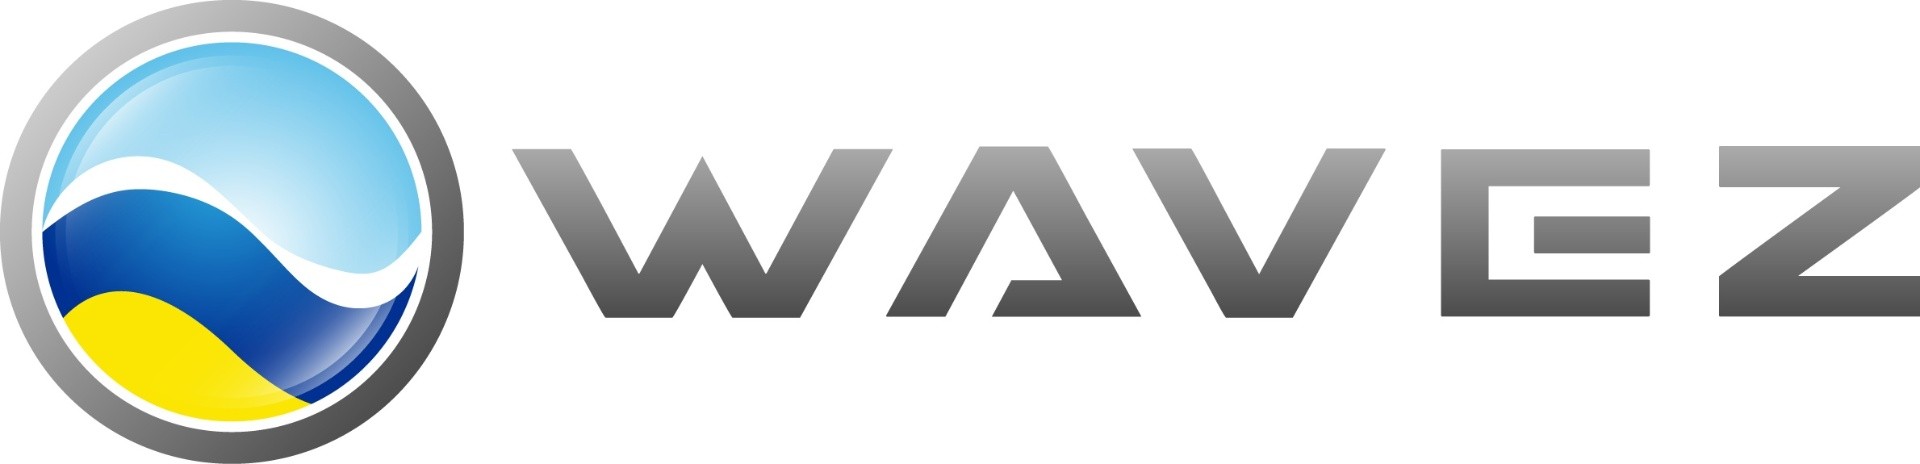 Wavez Water Sports Australia Footer Logo